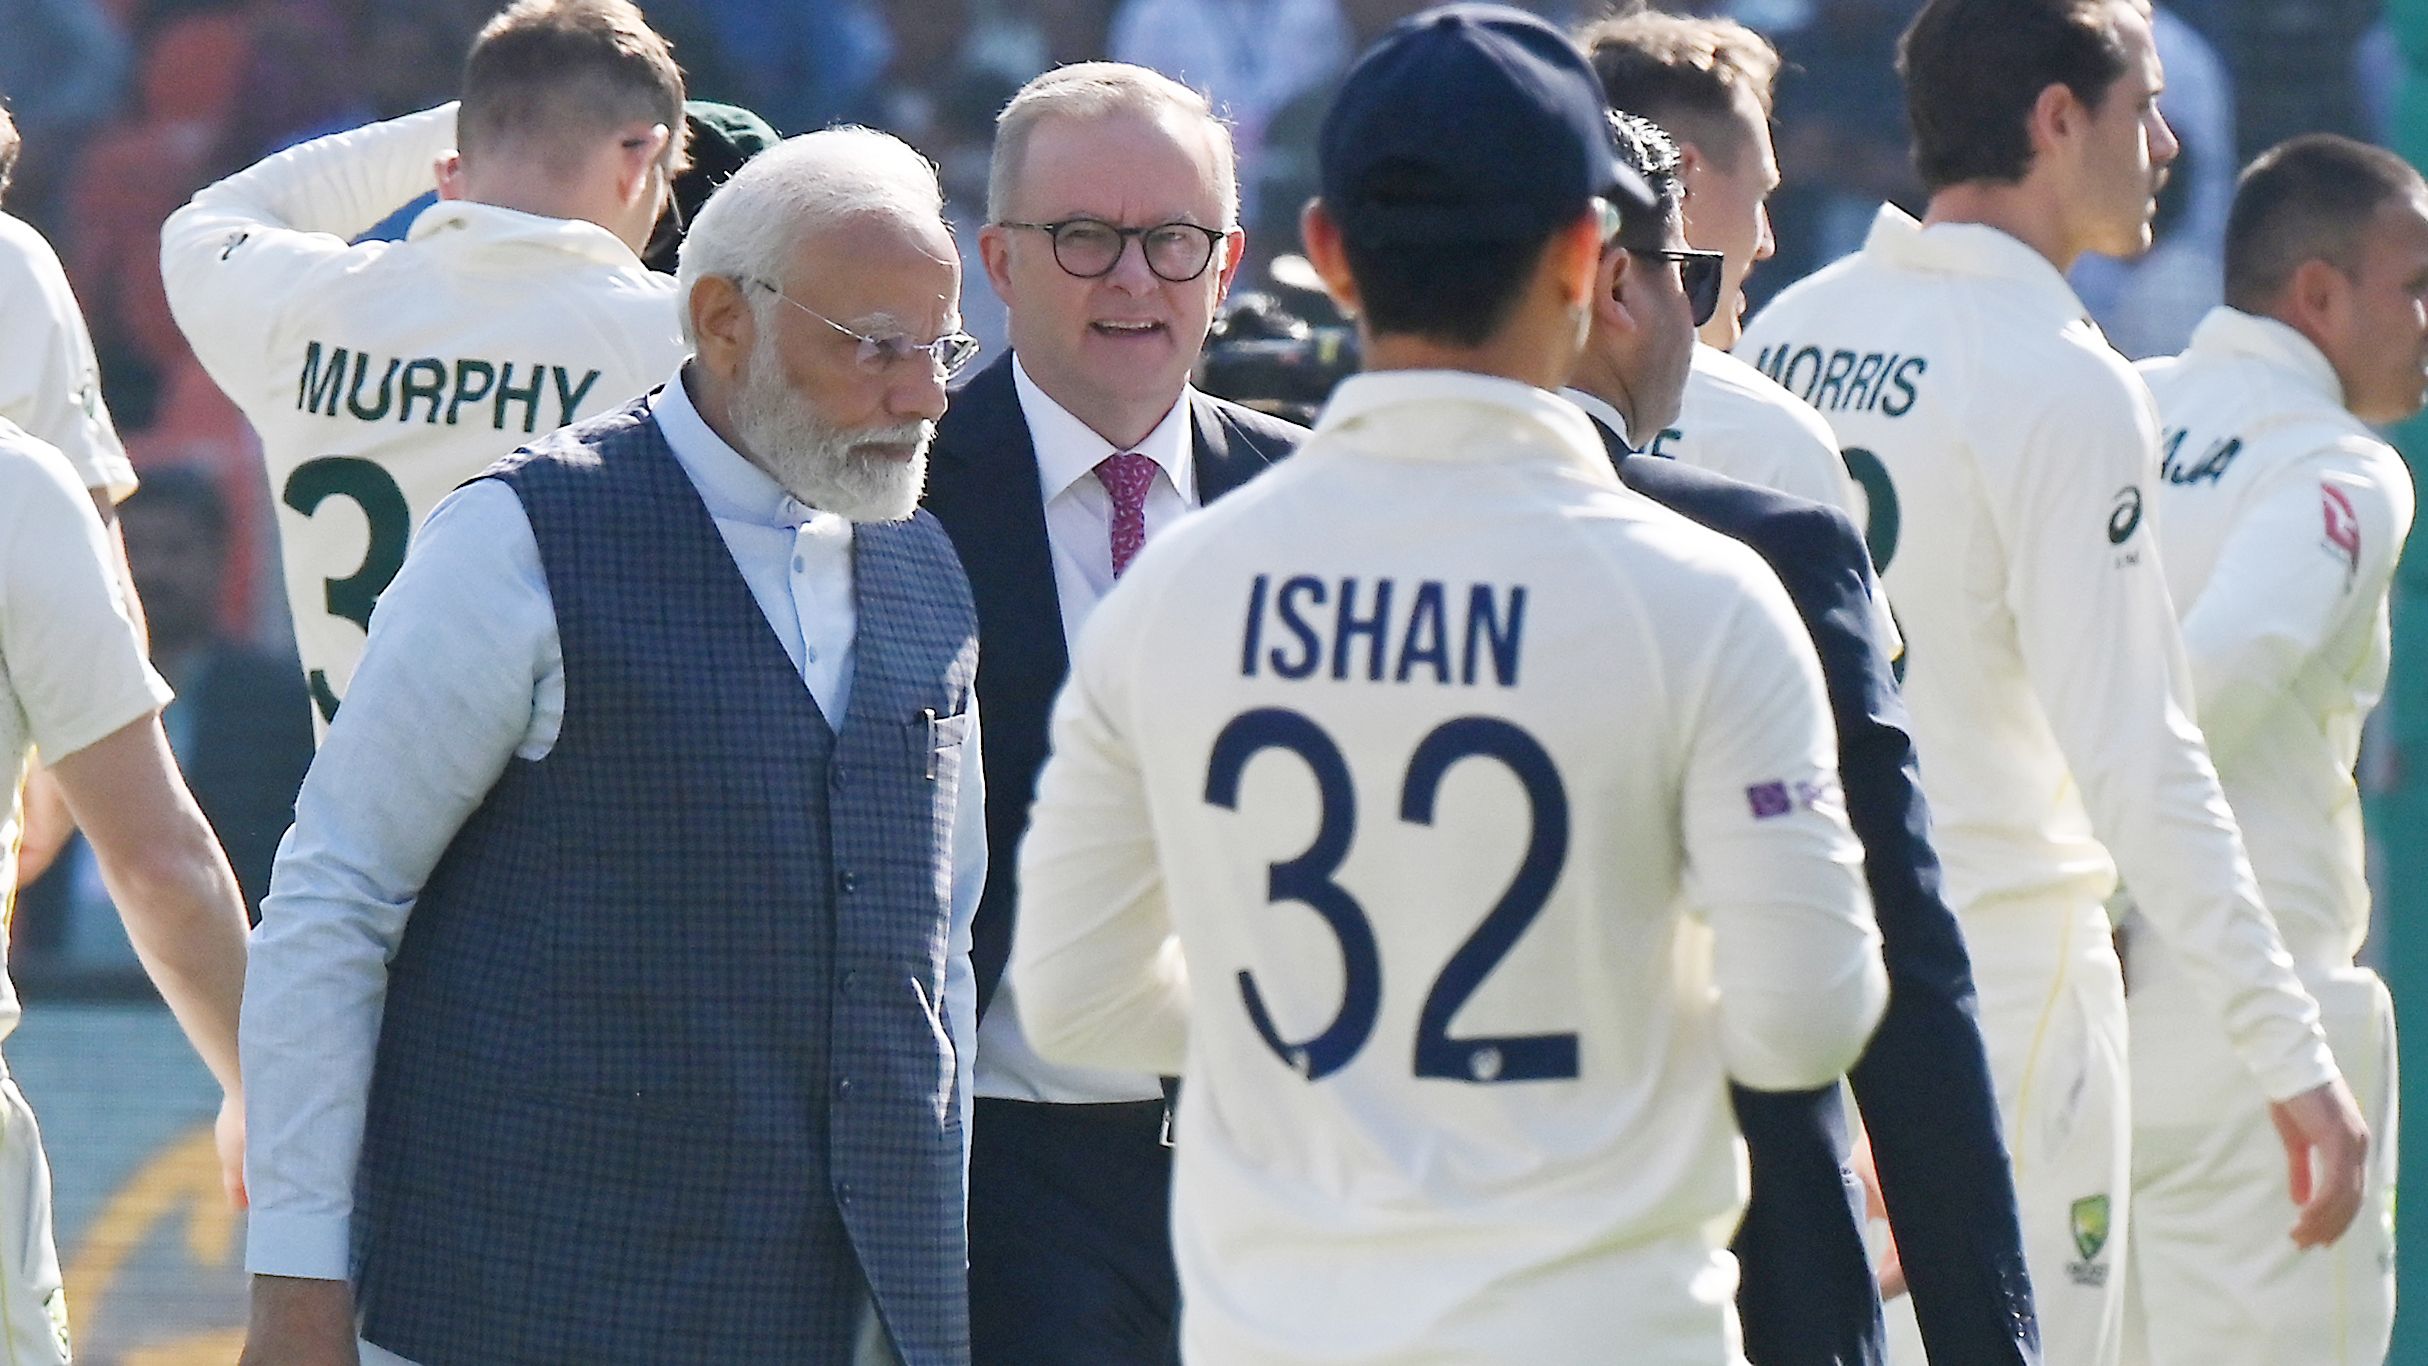 Narendra Modi, India&#x27;s prime minister, left, and Anthony Albanese, Australia&#x27;s prime minister, interact with players. Photographer: Prakash 